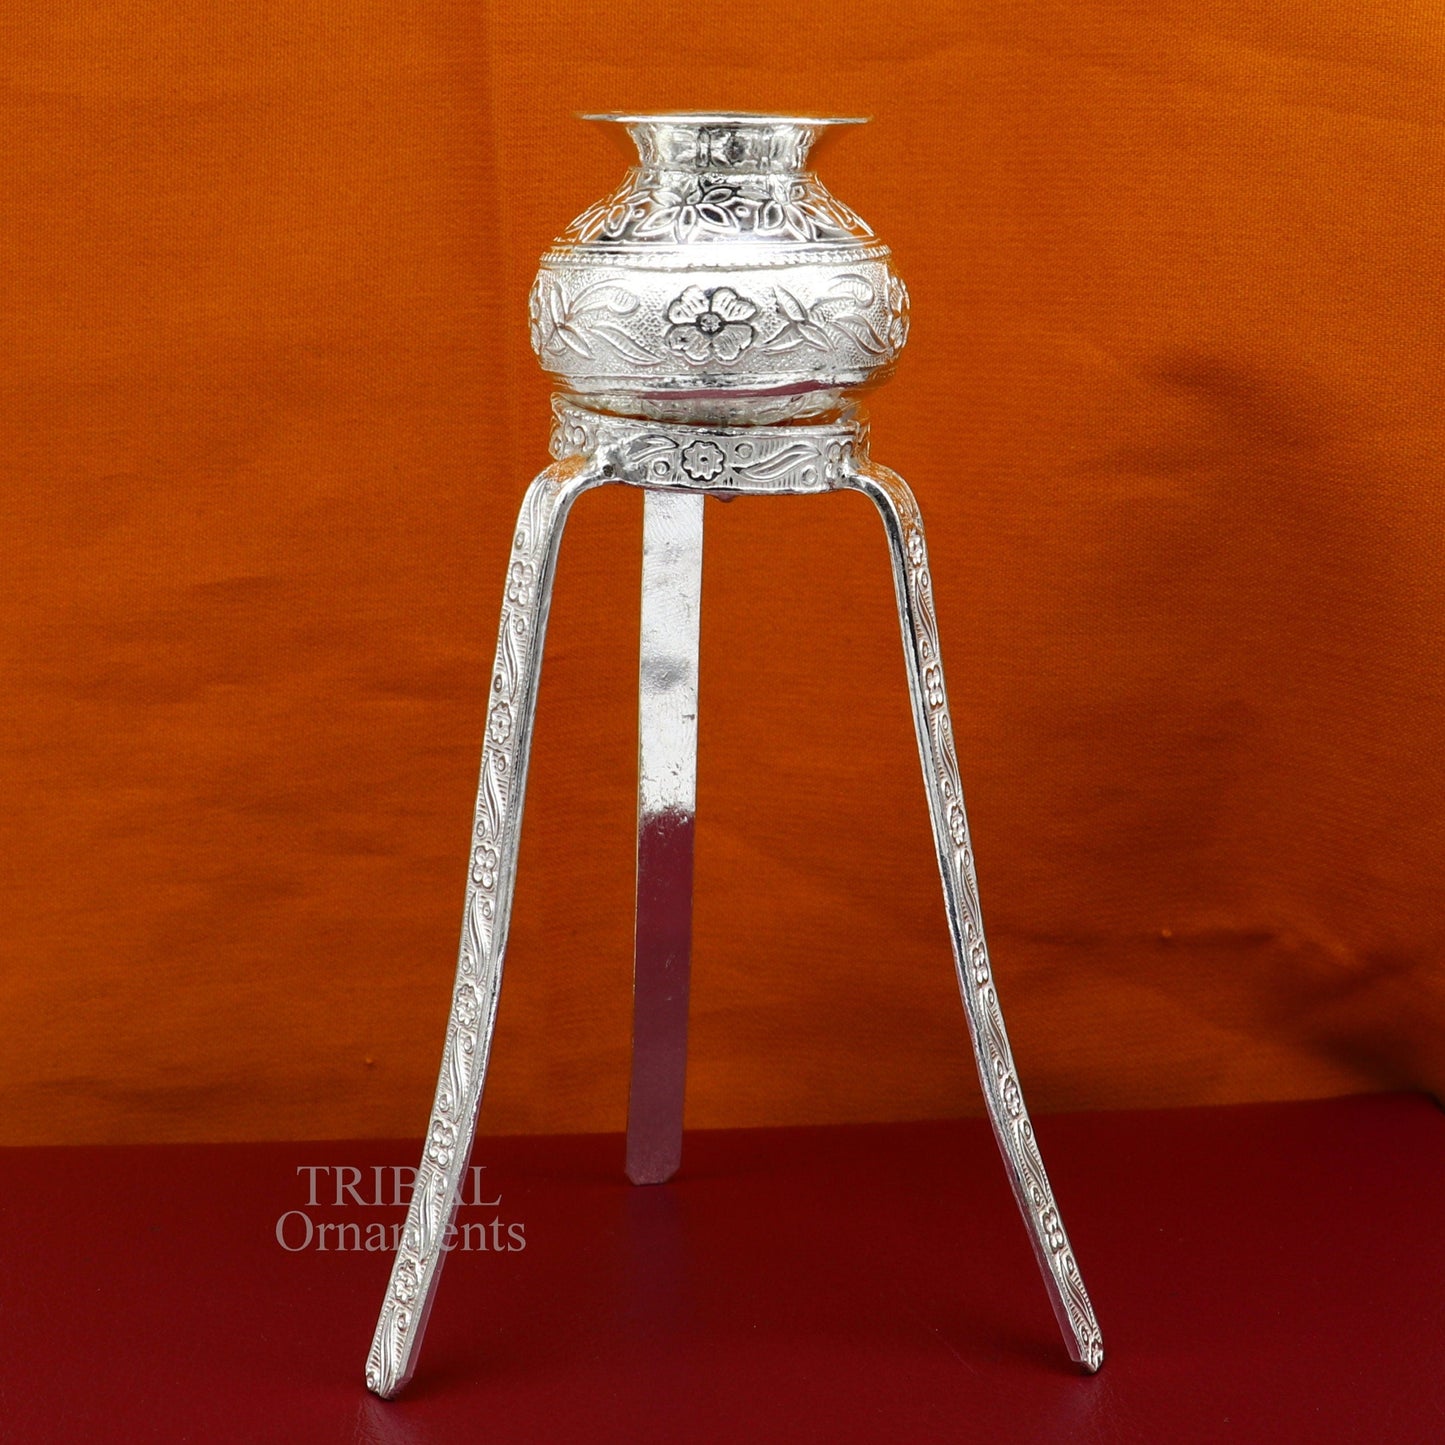 925 Sterling silver Lord Shiva Lingam stand/ Jalheri, use for put/hold Shiva Lingam and shiva abhishekam kalash, handmade puja article su733 - TRIBAL ORNAMENTS